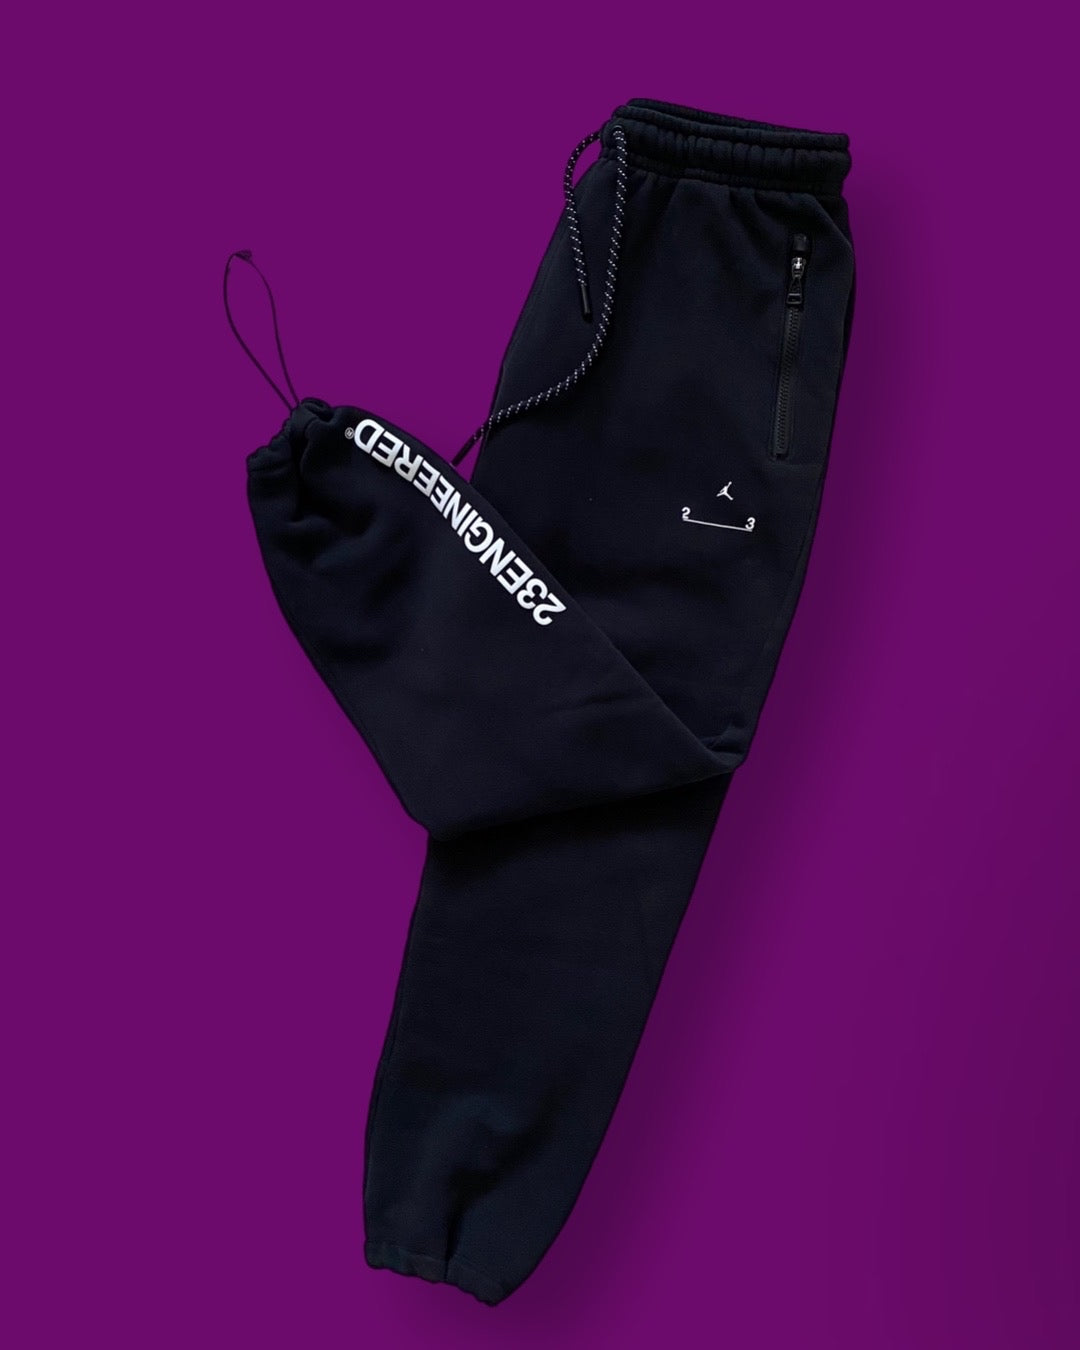 Jordan 23 Engineered Sweatpants